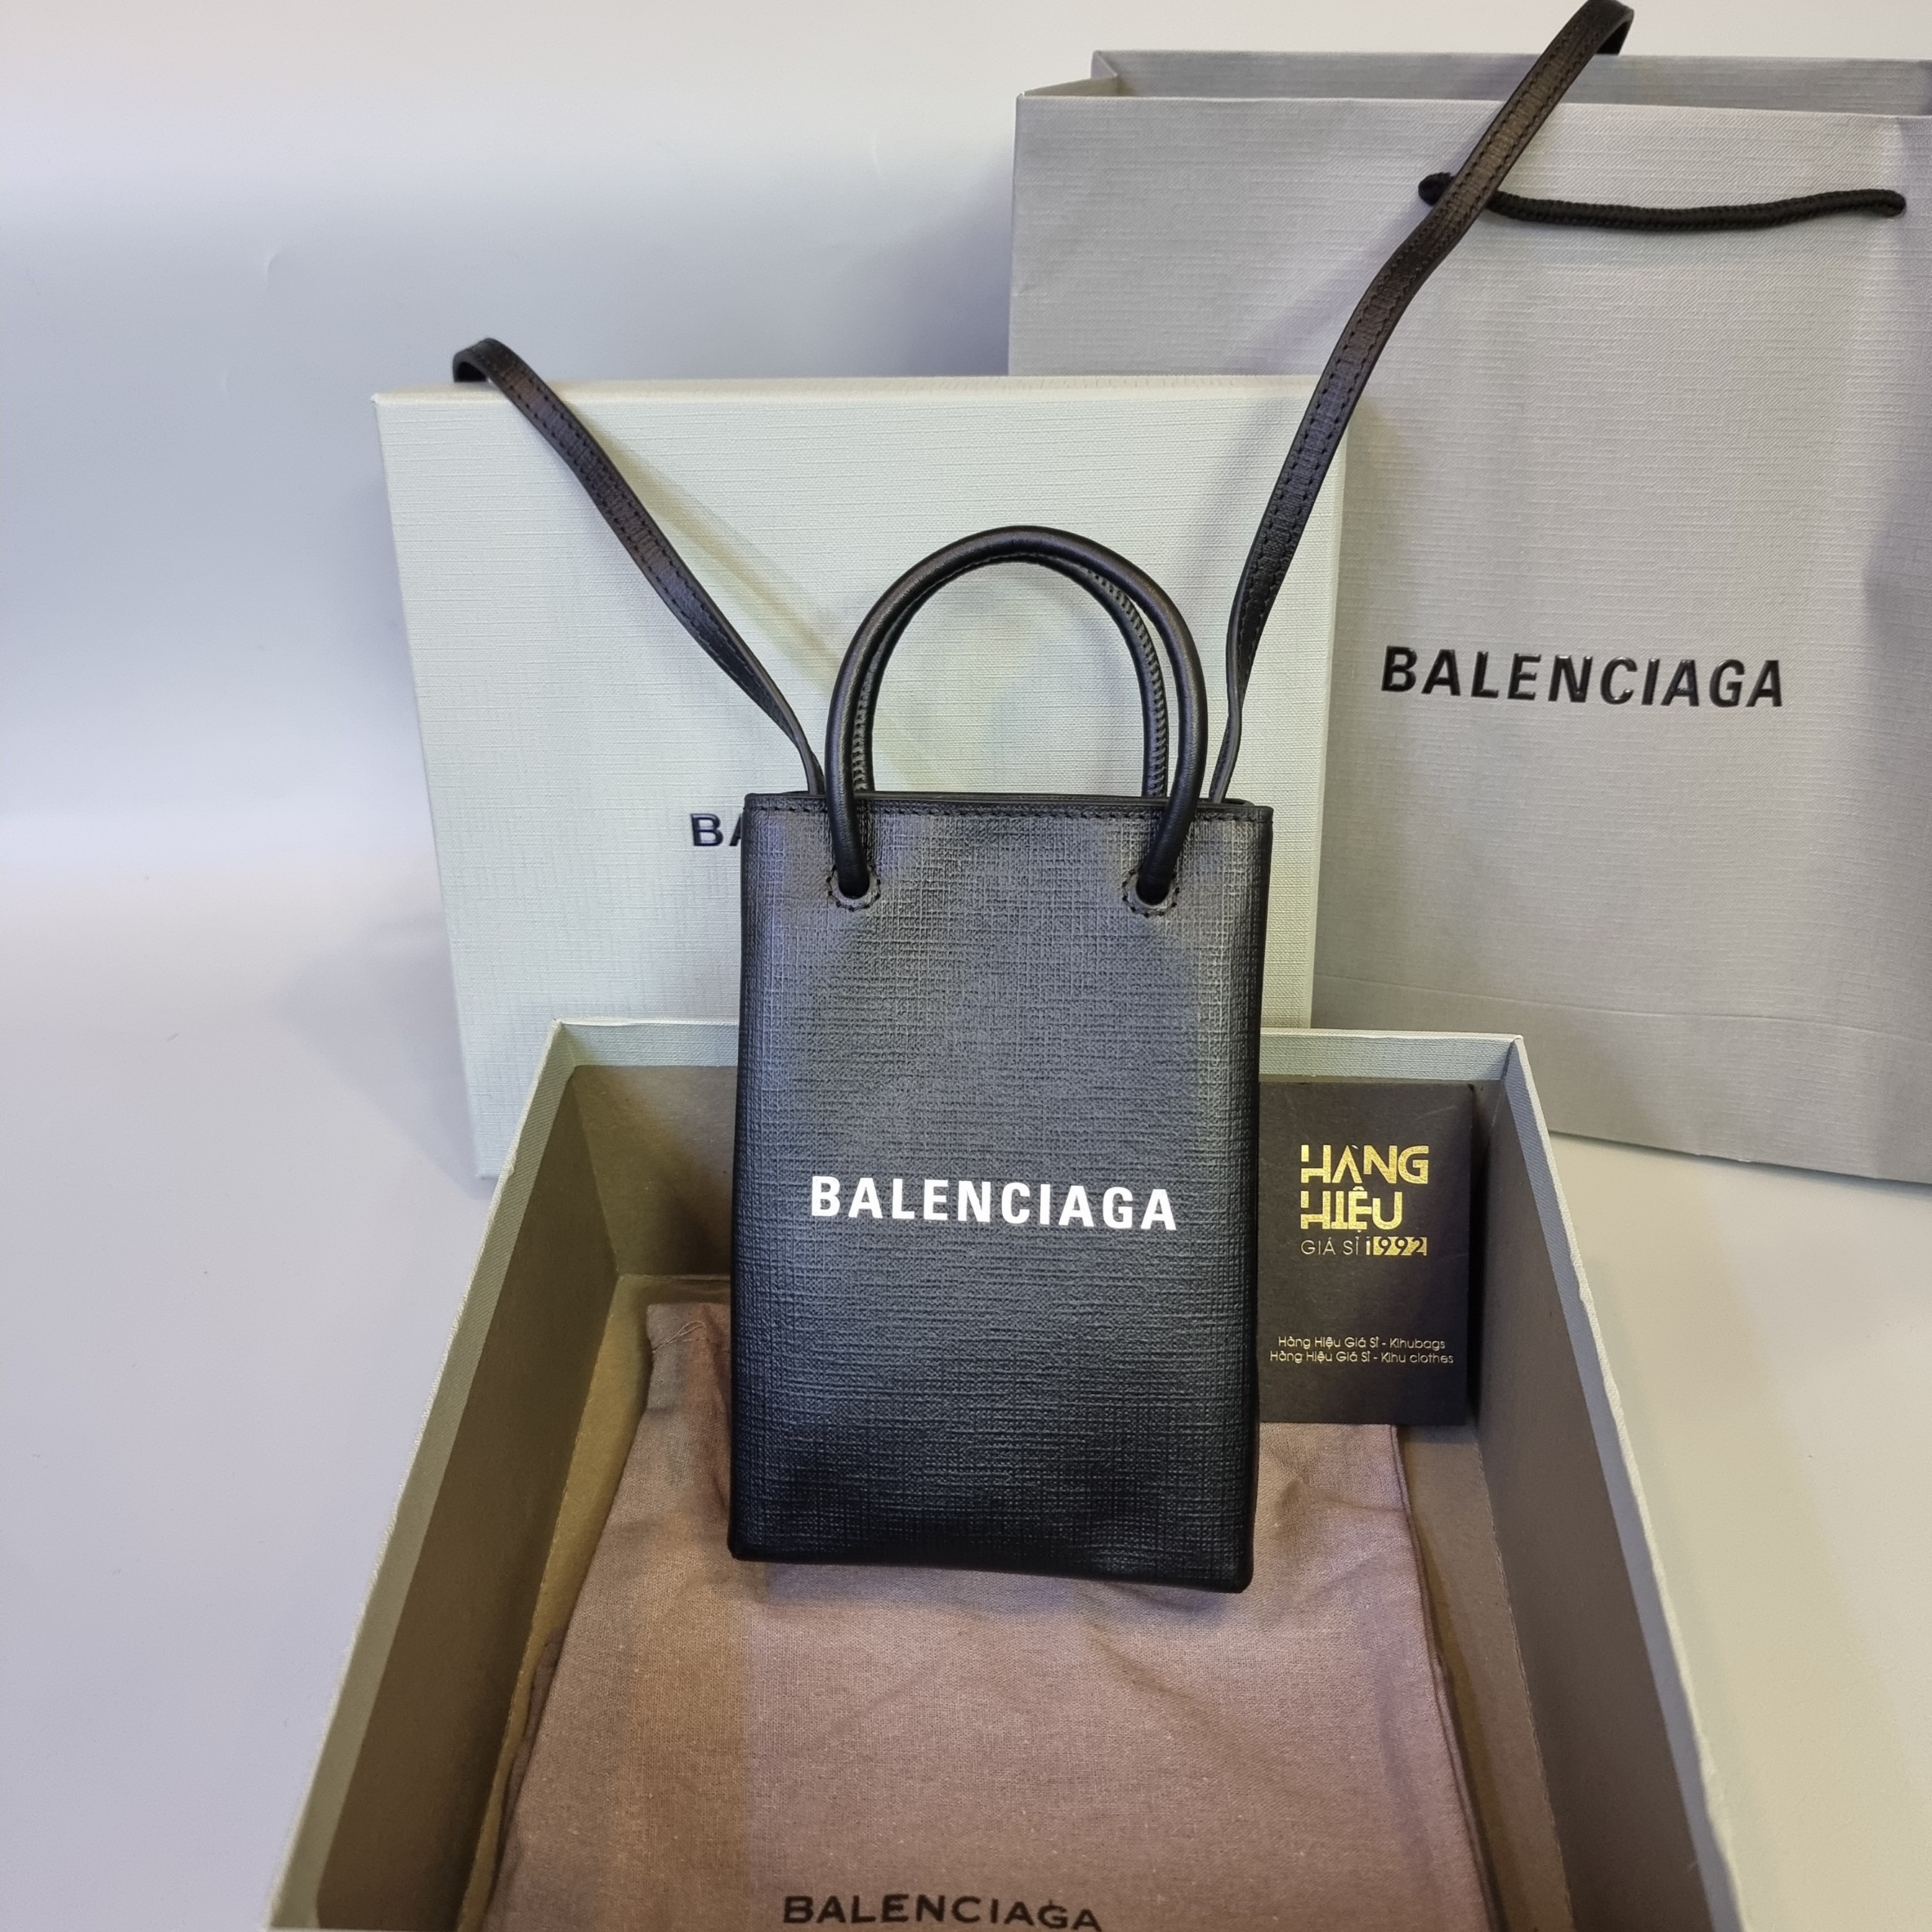 O RichBag  รบพร BALENCIAGA Shopping phone bag on Strap Size 47 x 7 x  18 Calfskin สายสะพายยาว 54 cm คะ ราคาพร 26500 nett  รนเดยวกนกบแมชมเลยครา รอของ 710 วนคะ  Facebook